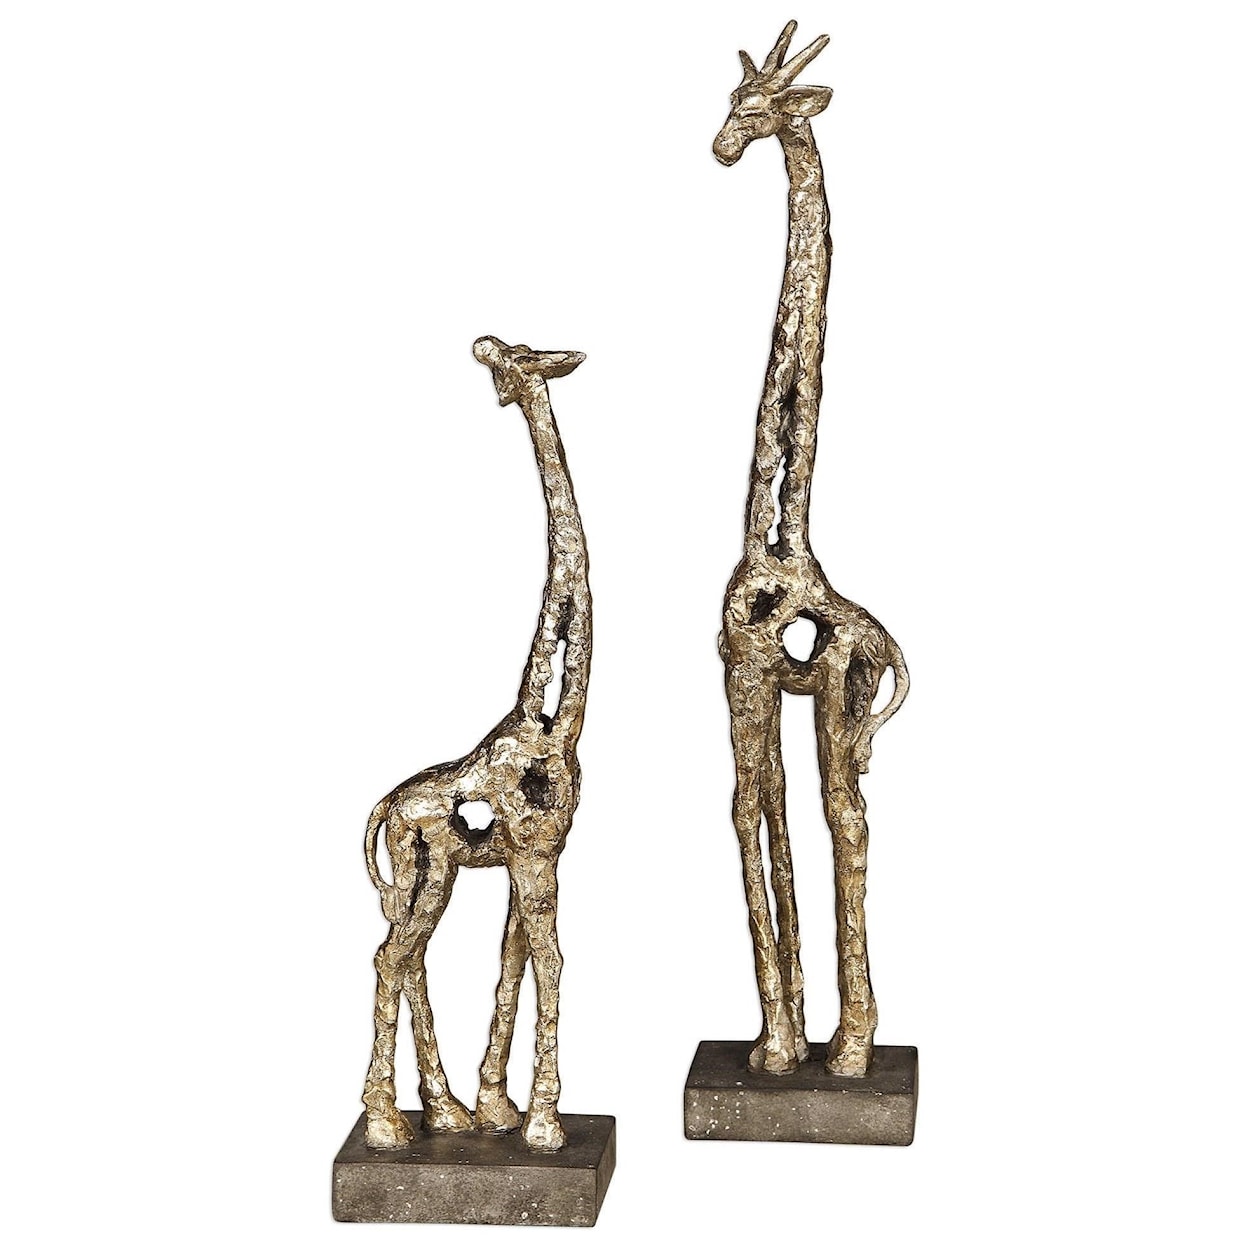 Uttermost Accessories - Statues and Figurines Masai Giraffe Figurines, S/2